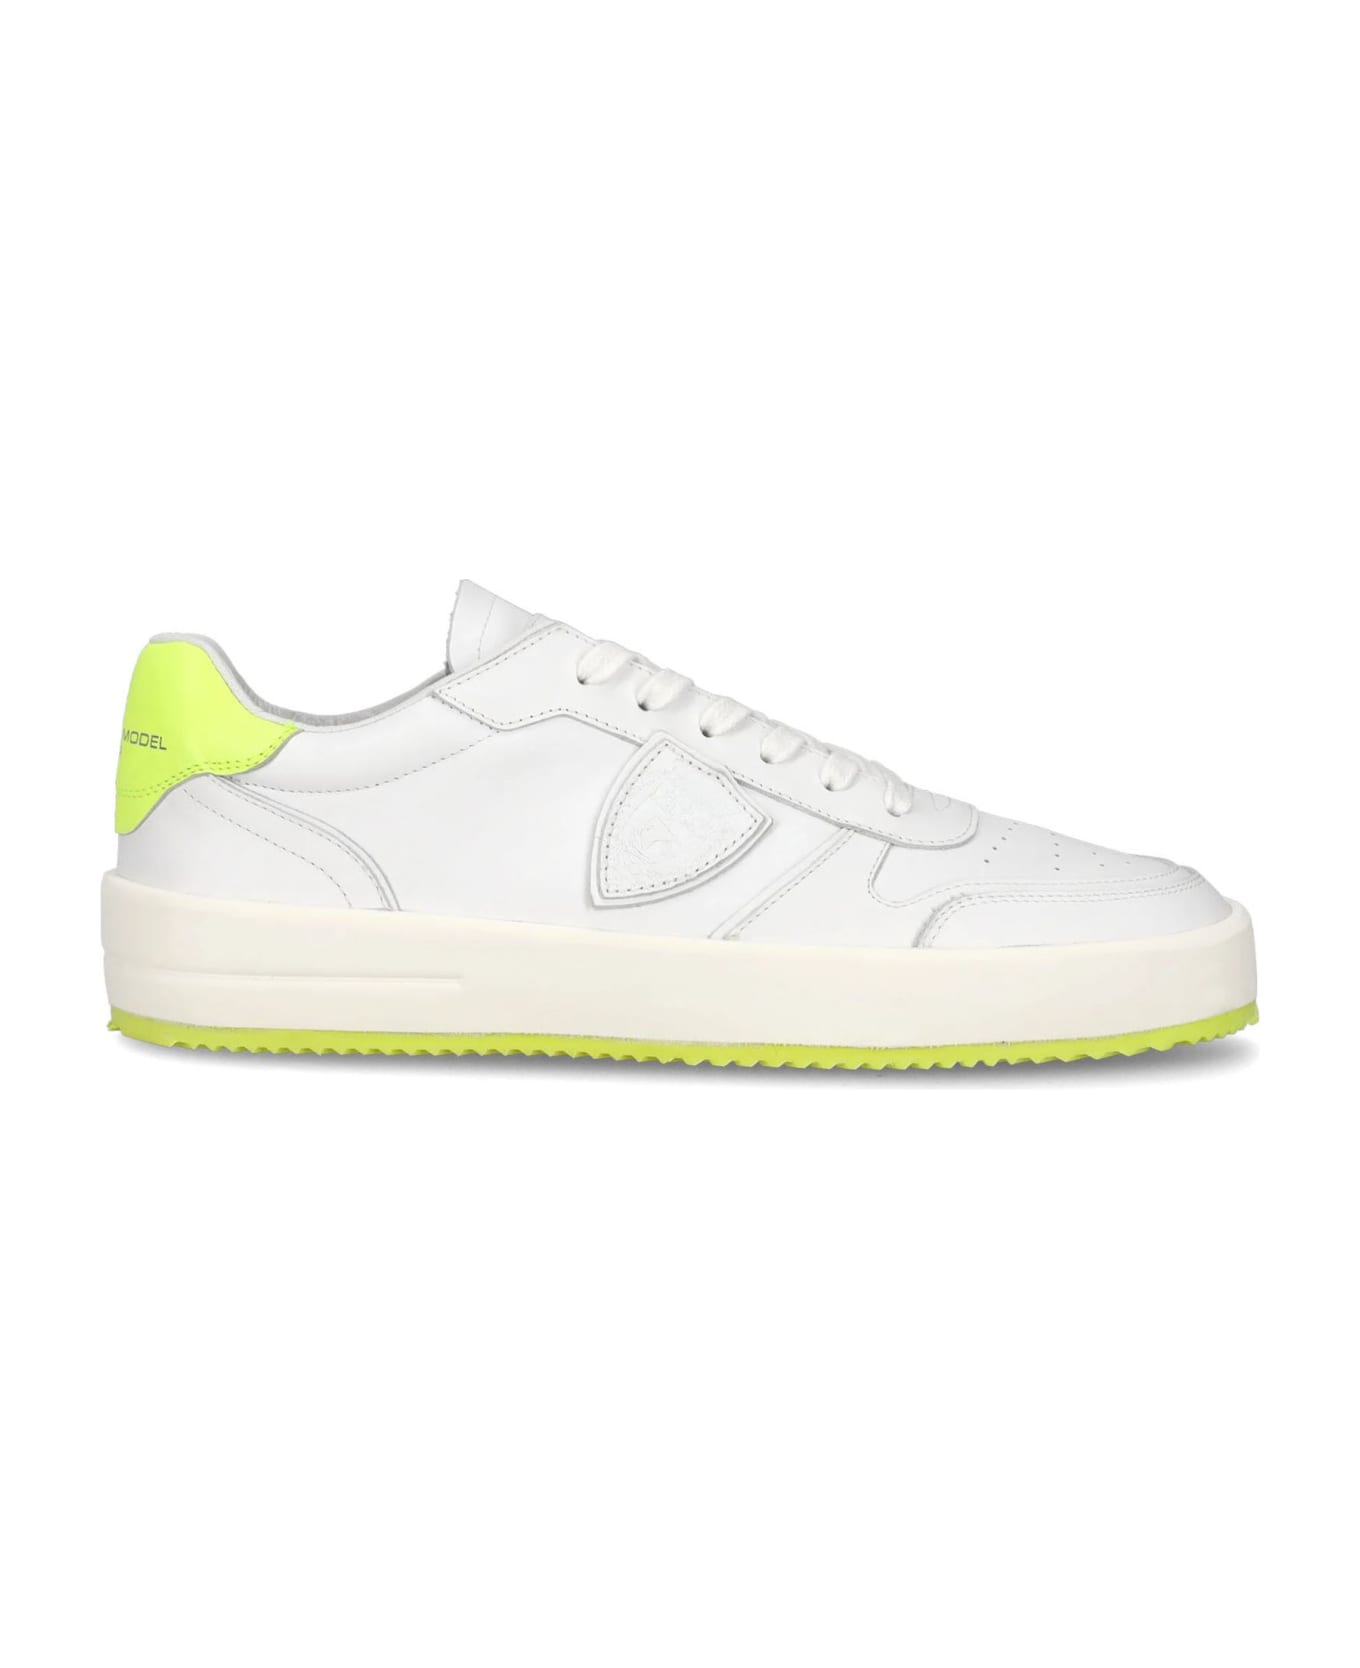 Philippe Model Nice Sneaker White And Neon Yellow - White スニーカー